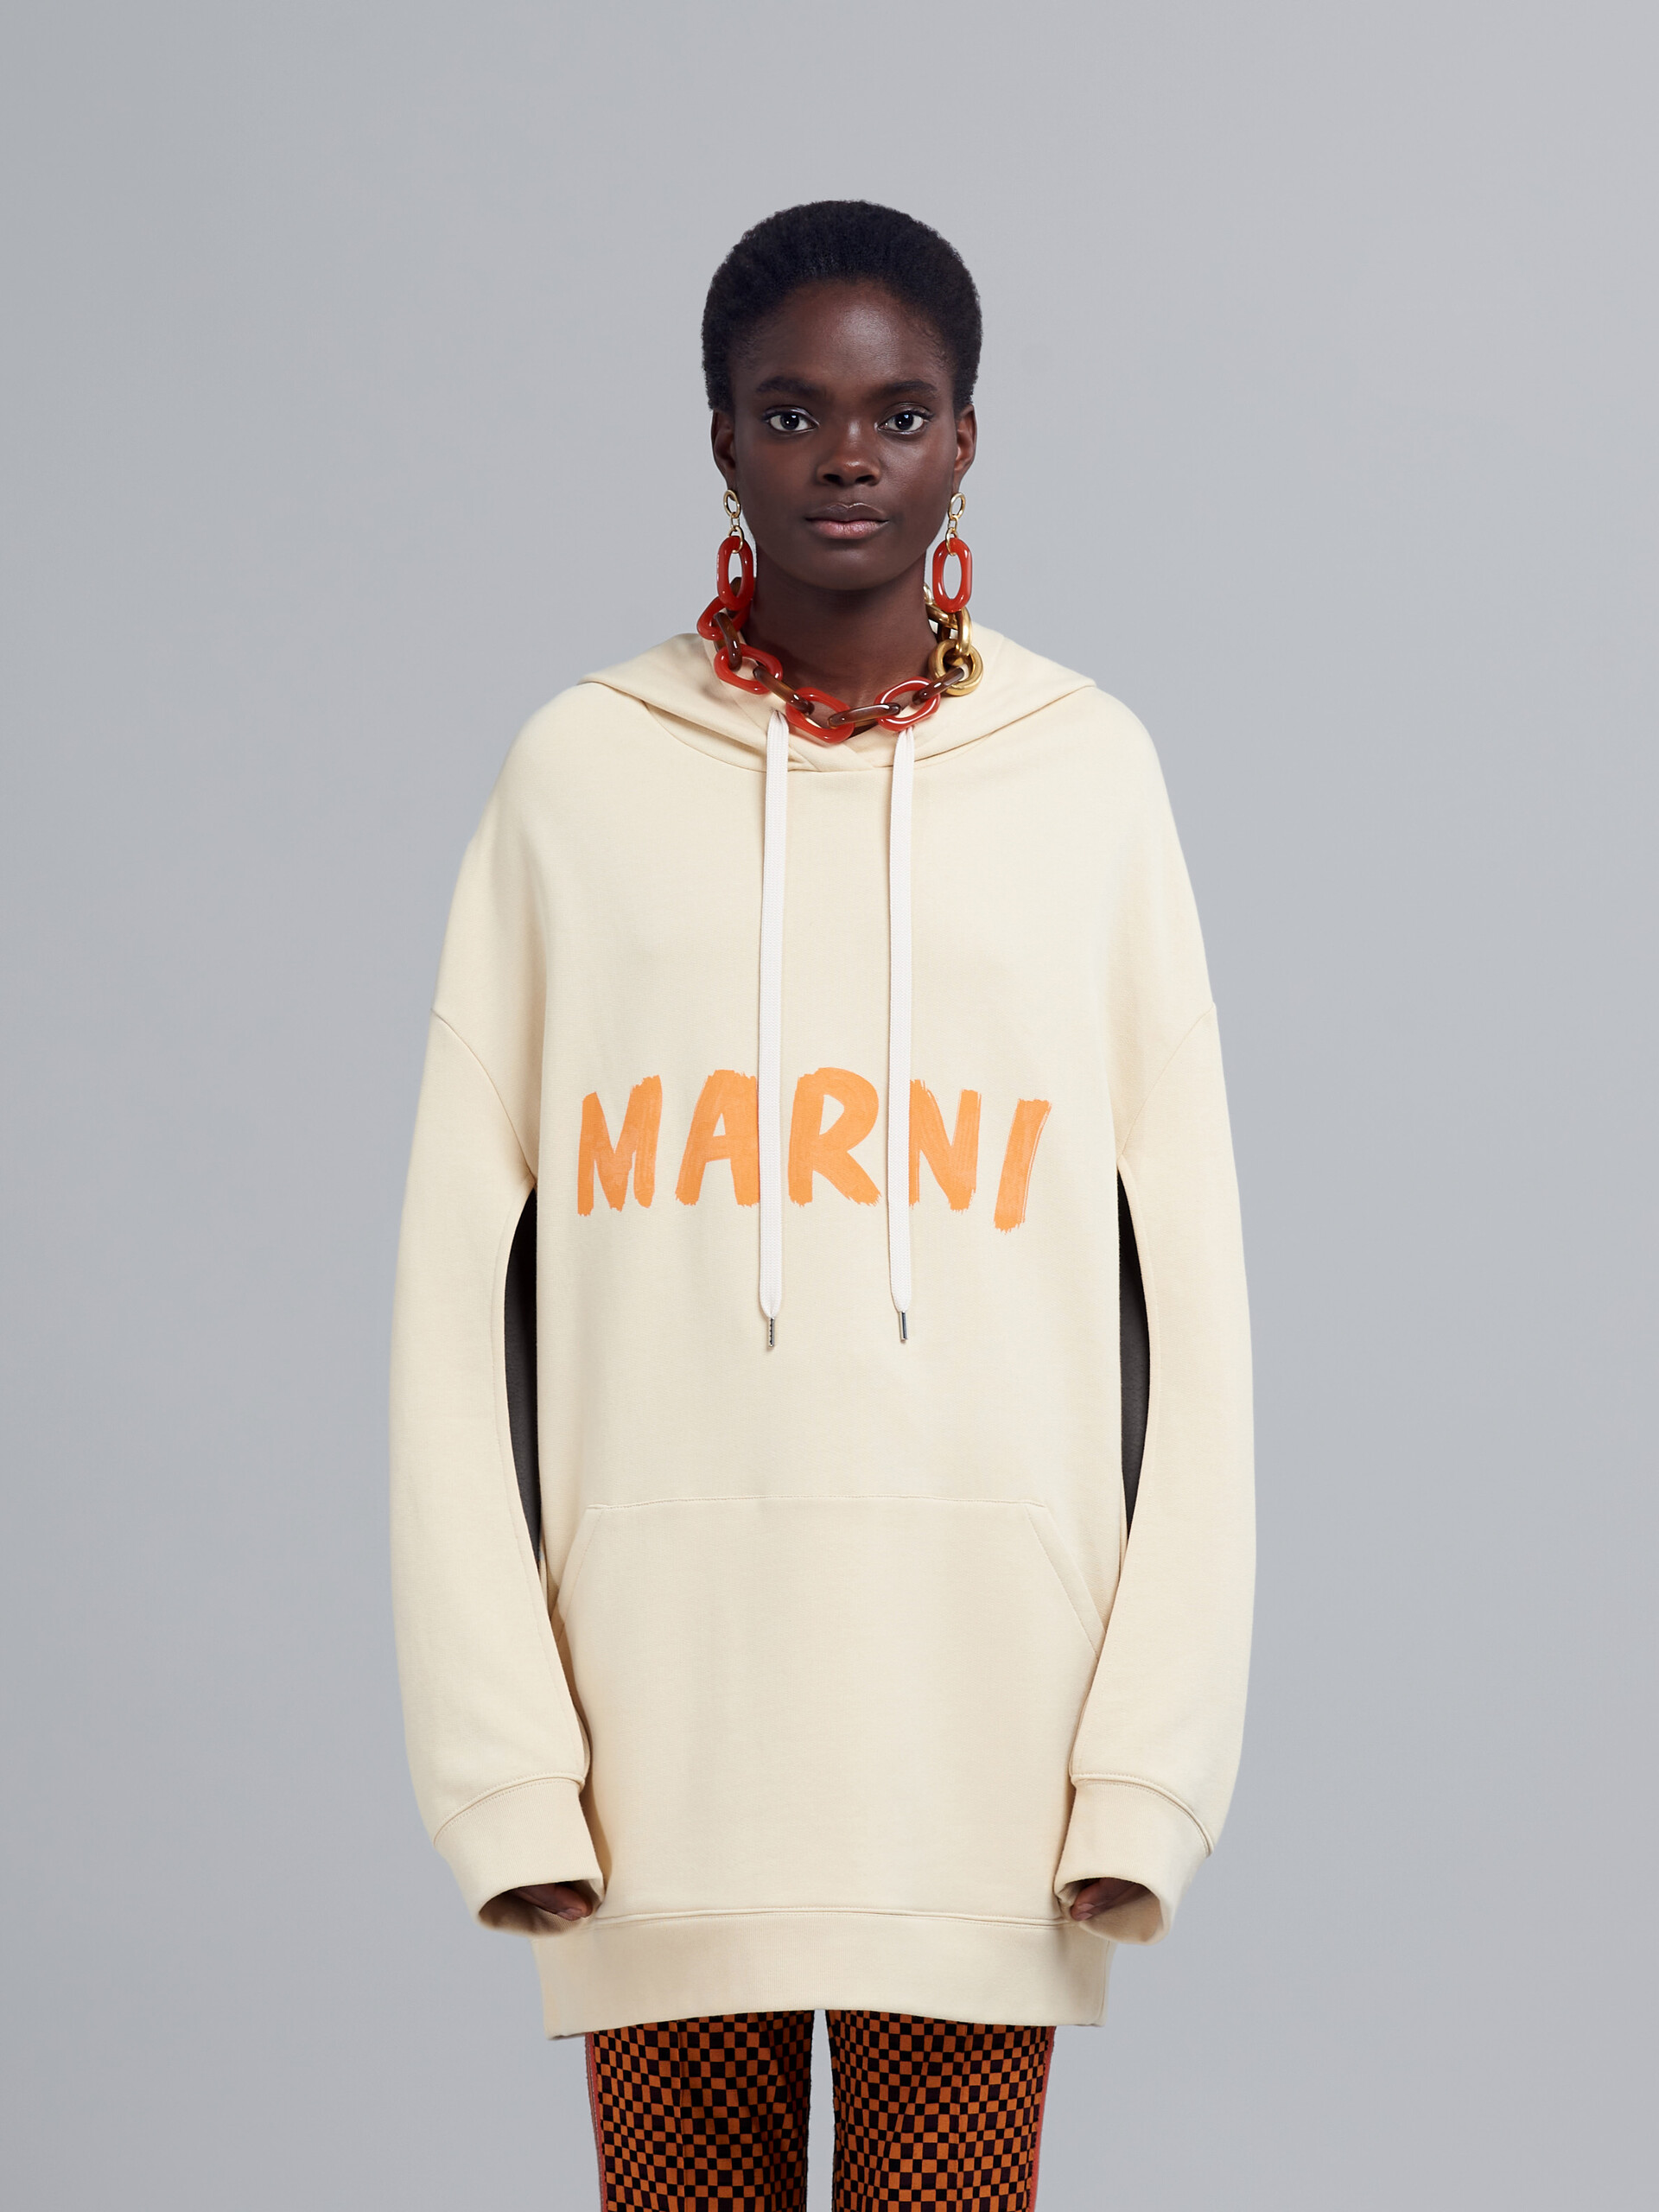 Marni lettering organic cotton sweatshirt - Pullovers - Image 2